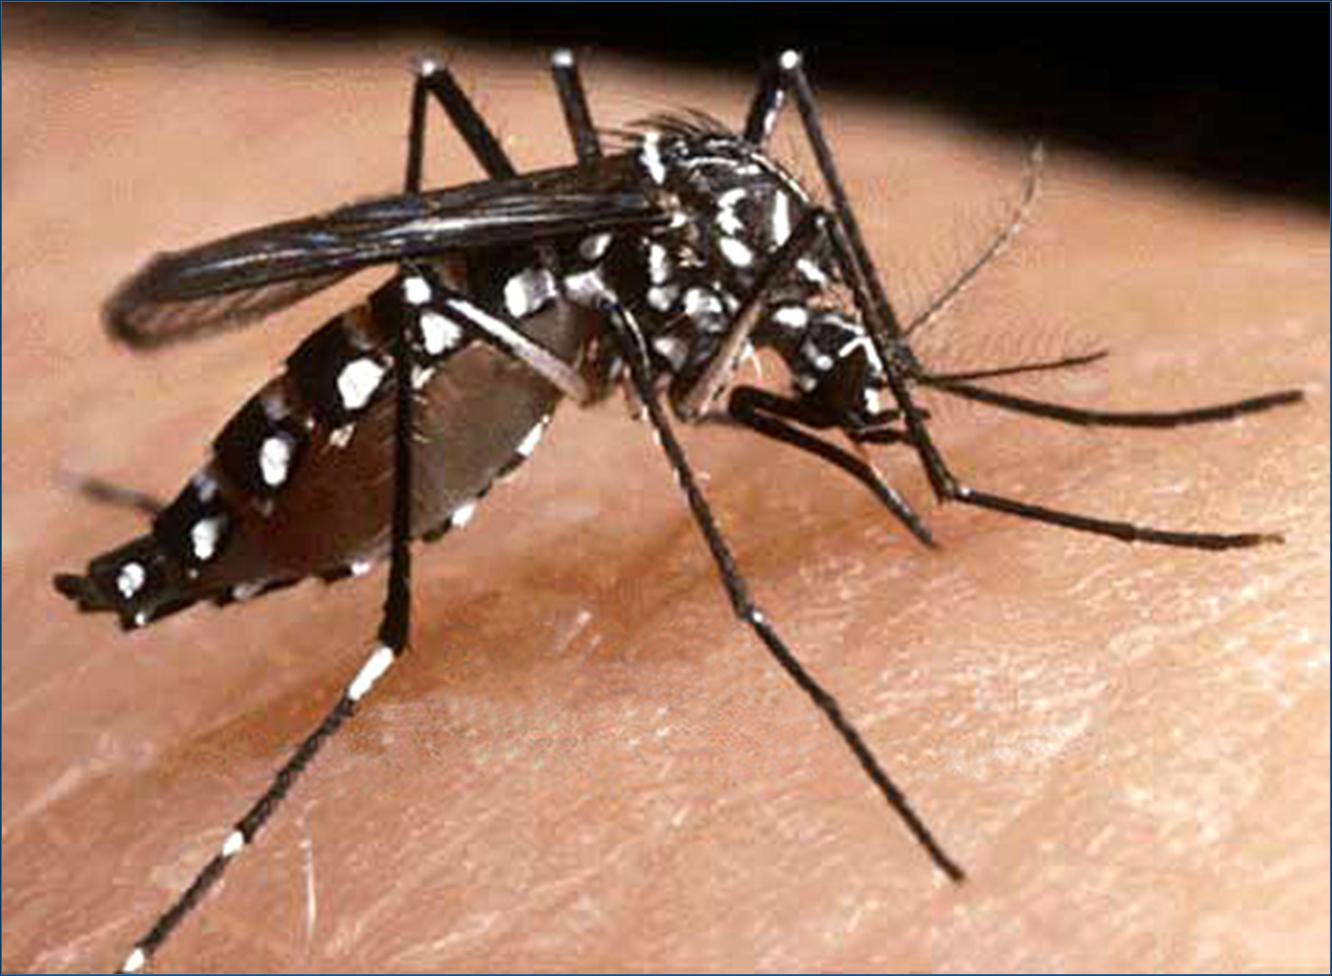 Dourados, segundo boletim epidemiológico da Secretaria de Estado de Saúde, enfrenta alta incidência de dengue